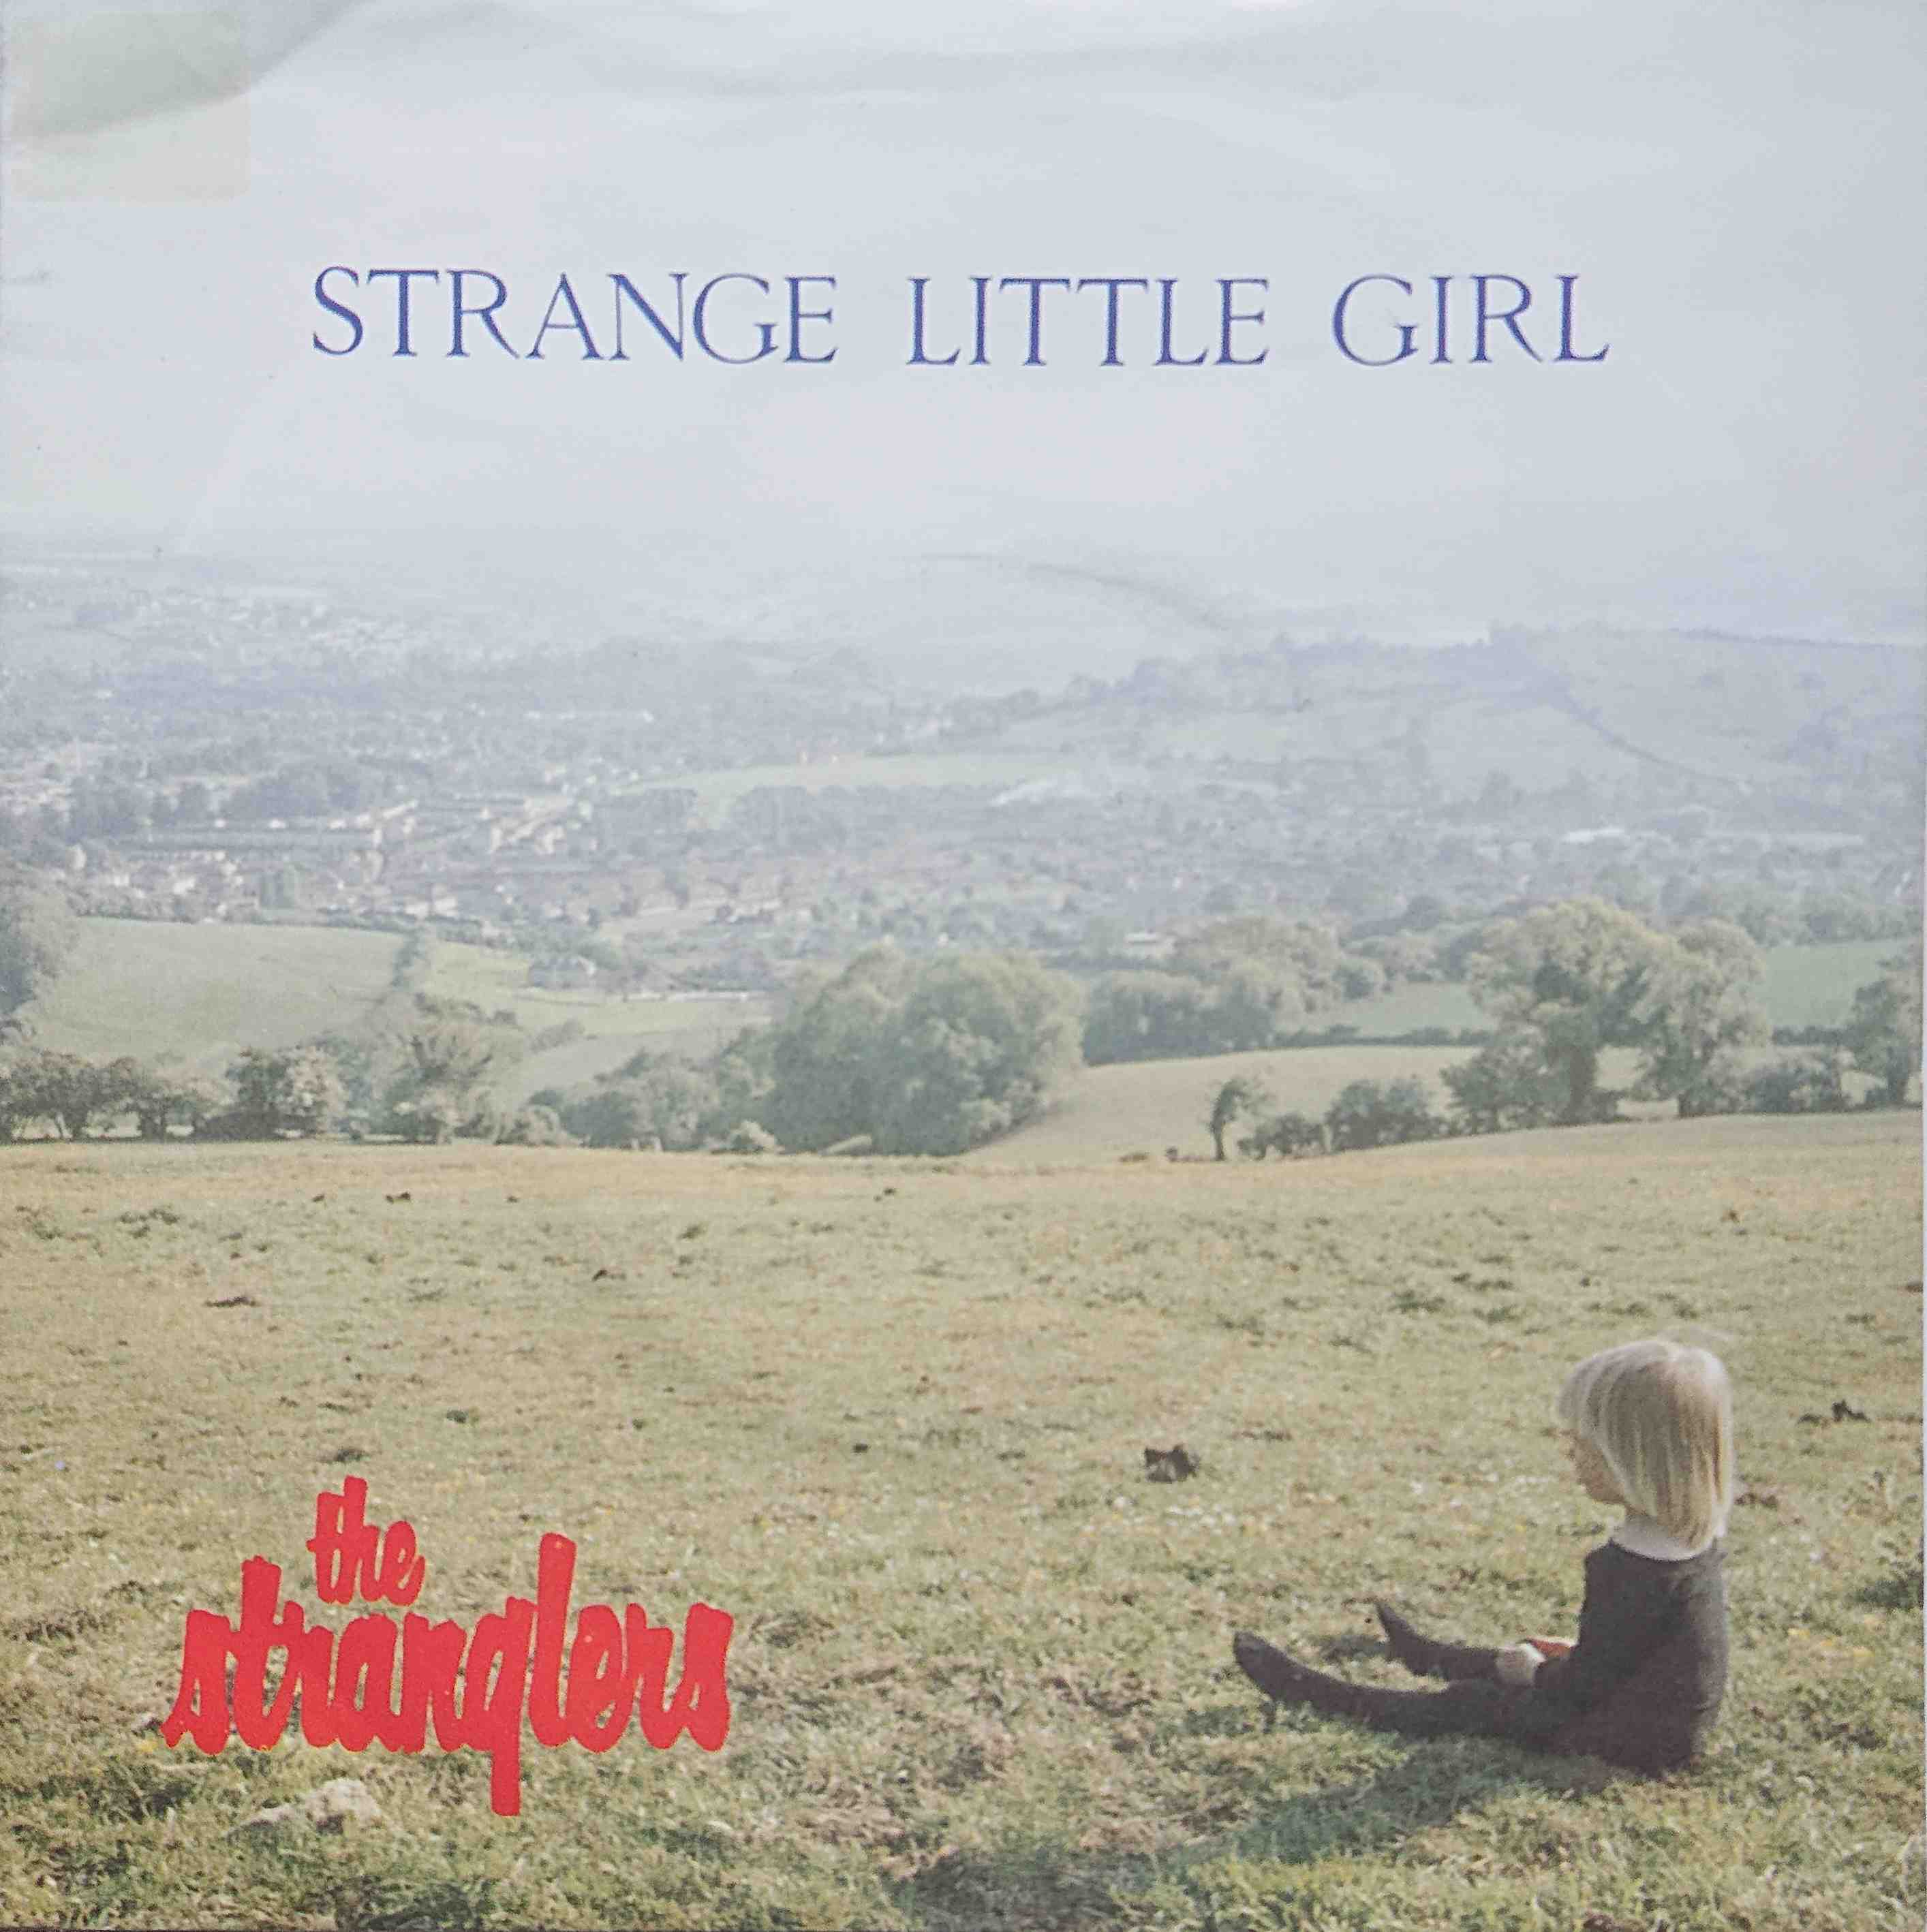 Picture of Strange little girl by artist The Stranglers  from The Stranglers singles